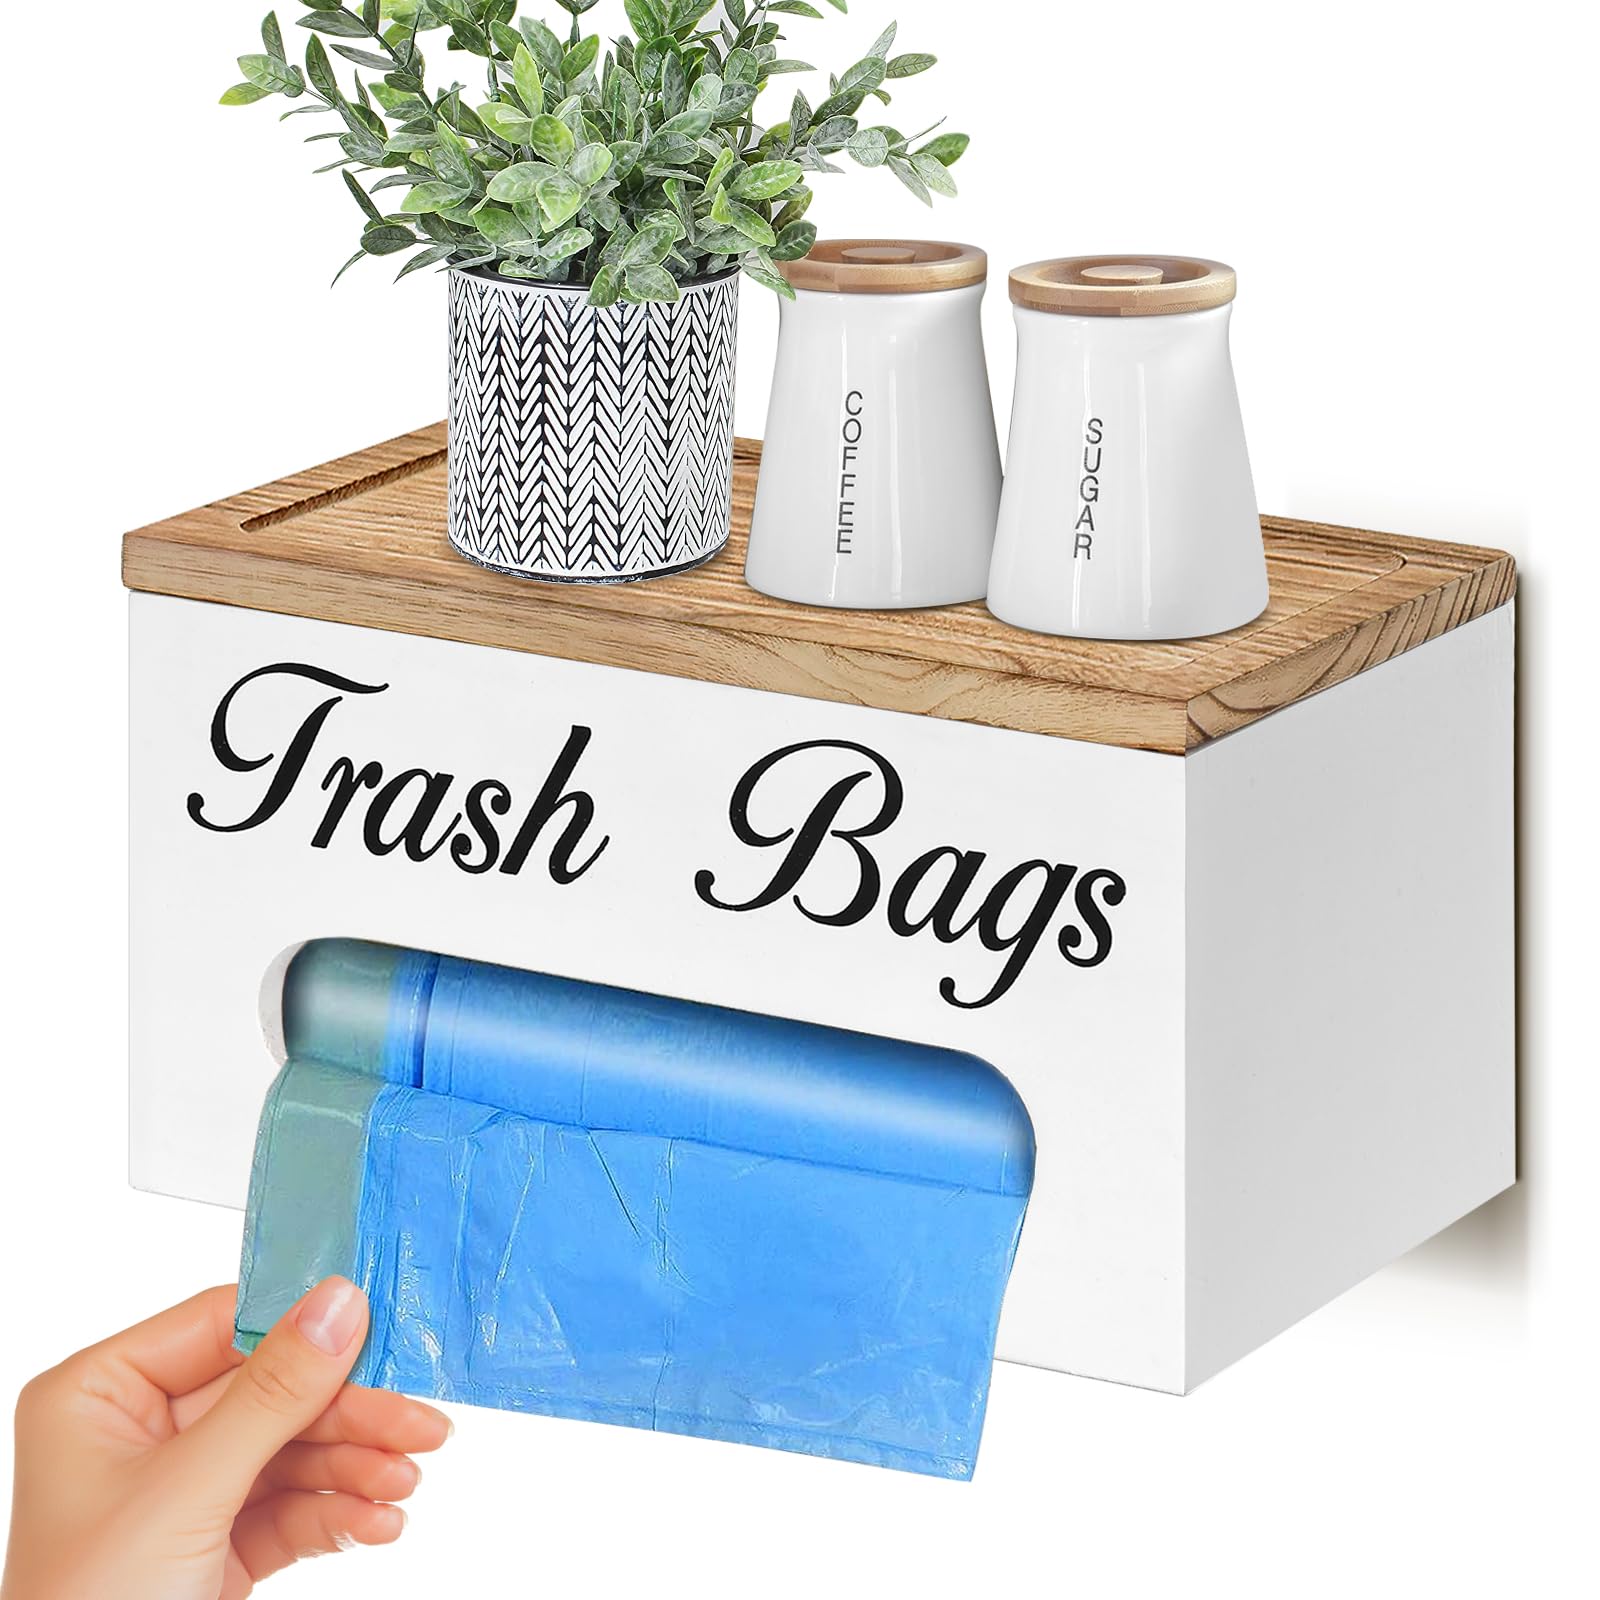 VARIERA Plastic Bag Dispenser Ideal for Storing Things Like Plastic Bags,Toilet/Kitchen  Rolls,Gloves and